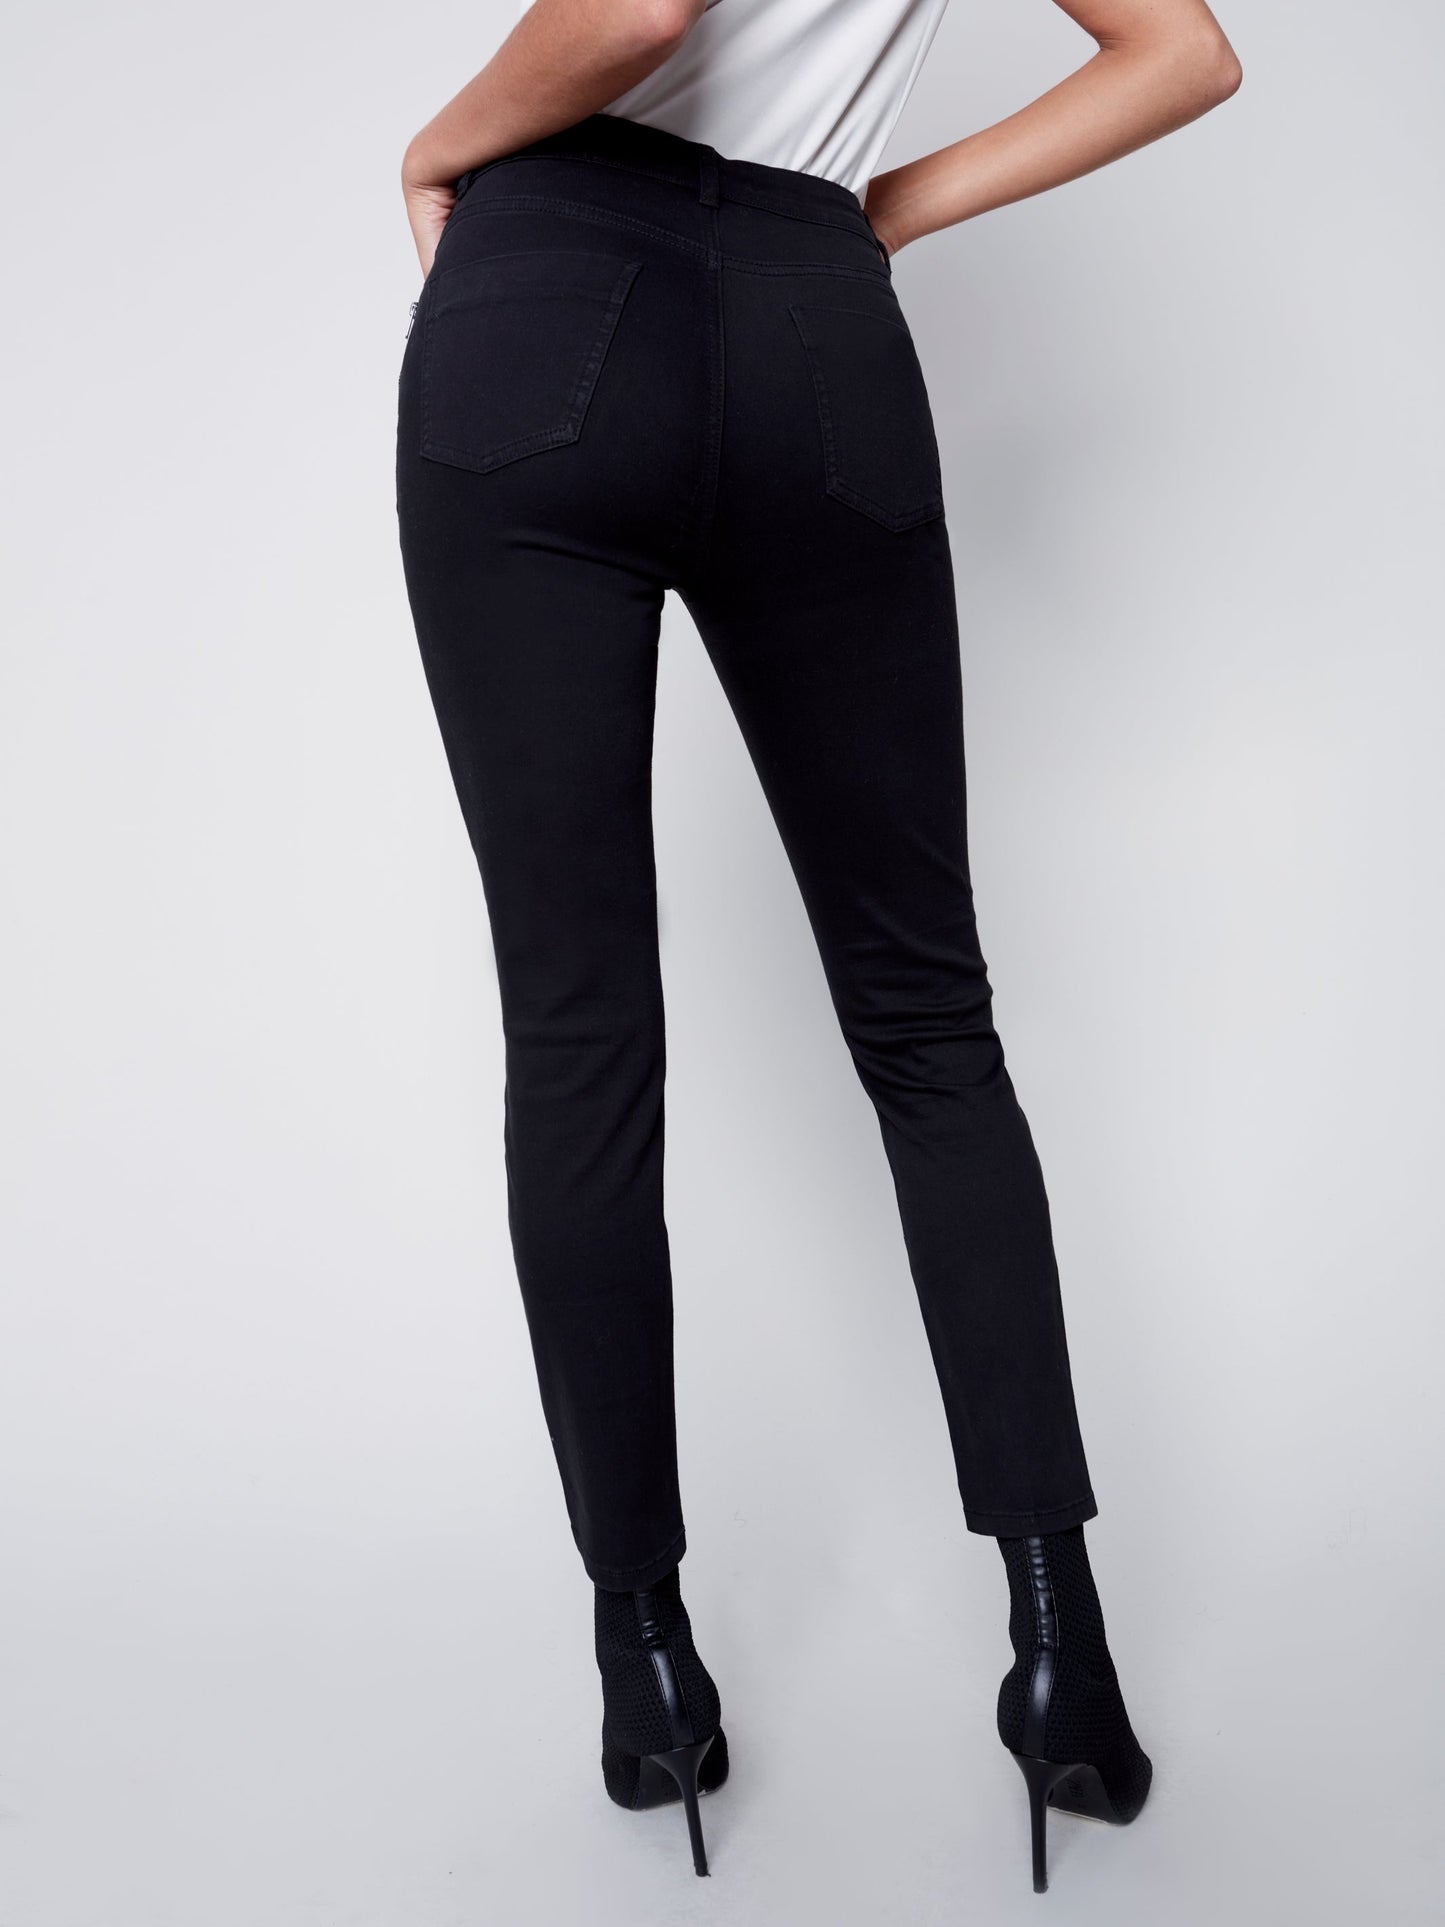 A woman wearing comfortable Charlie B Side Zip Pocket Skinny Jeans.